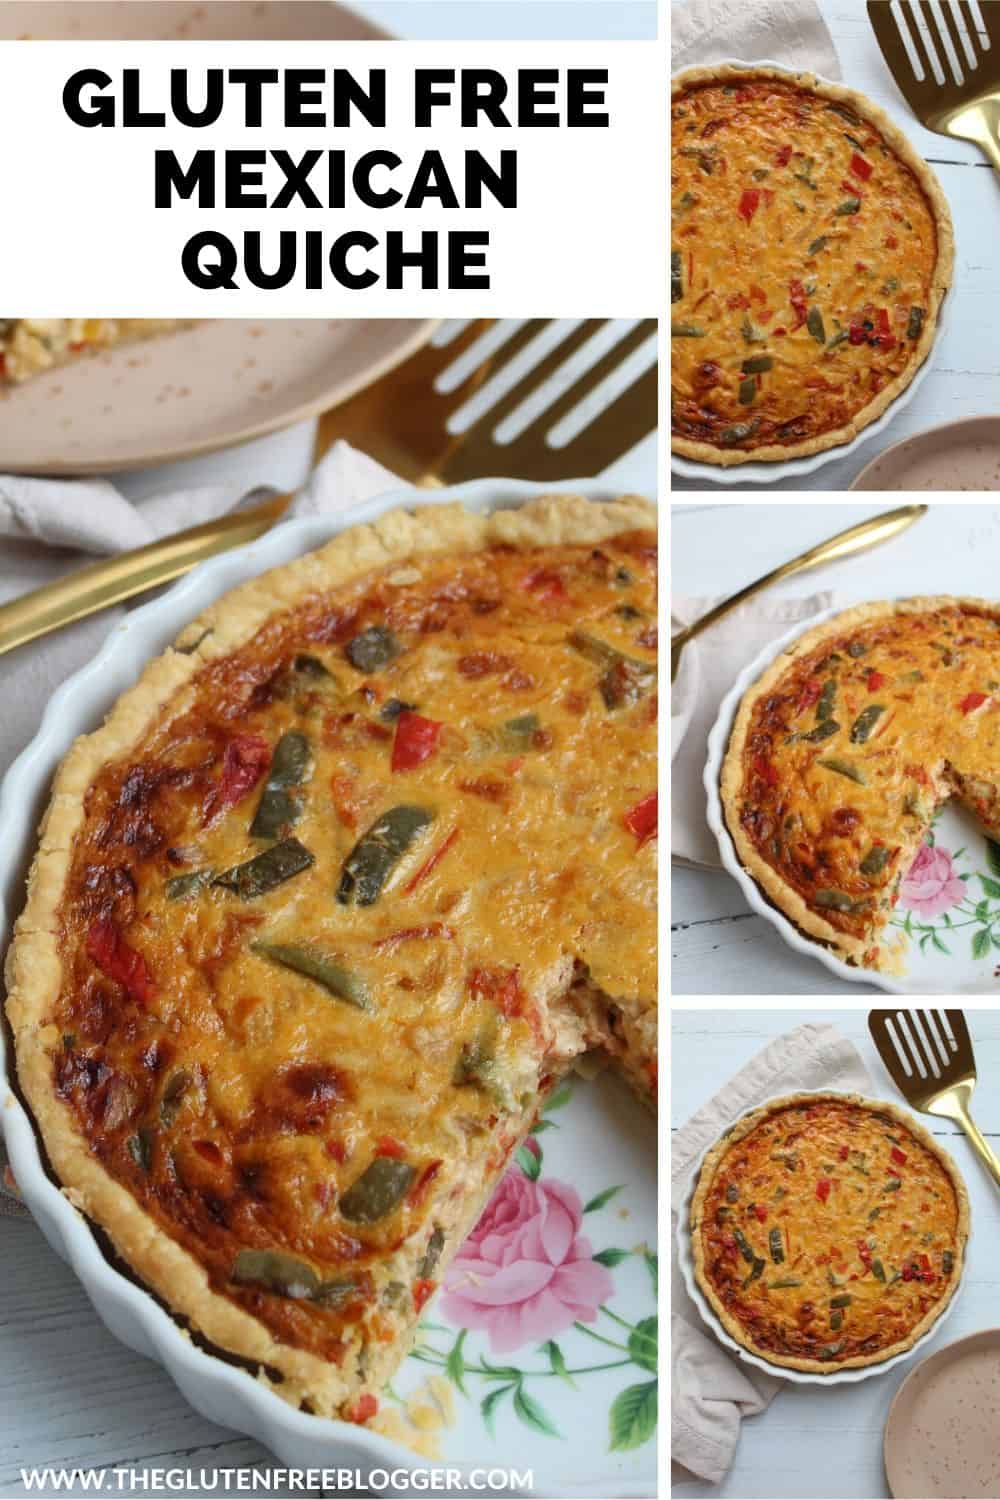 https://www.theglutenfreeblogger.com/wp-content/uploads/2020/05/gluten-free-quiche-recipe-easy-gluten-free-pastry-mexican-food-1.jpg